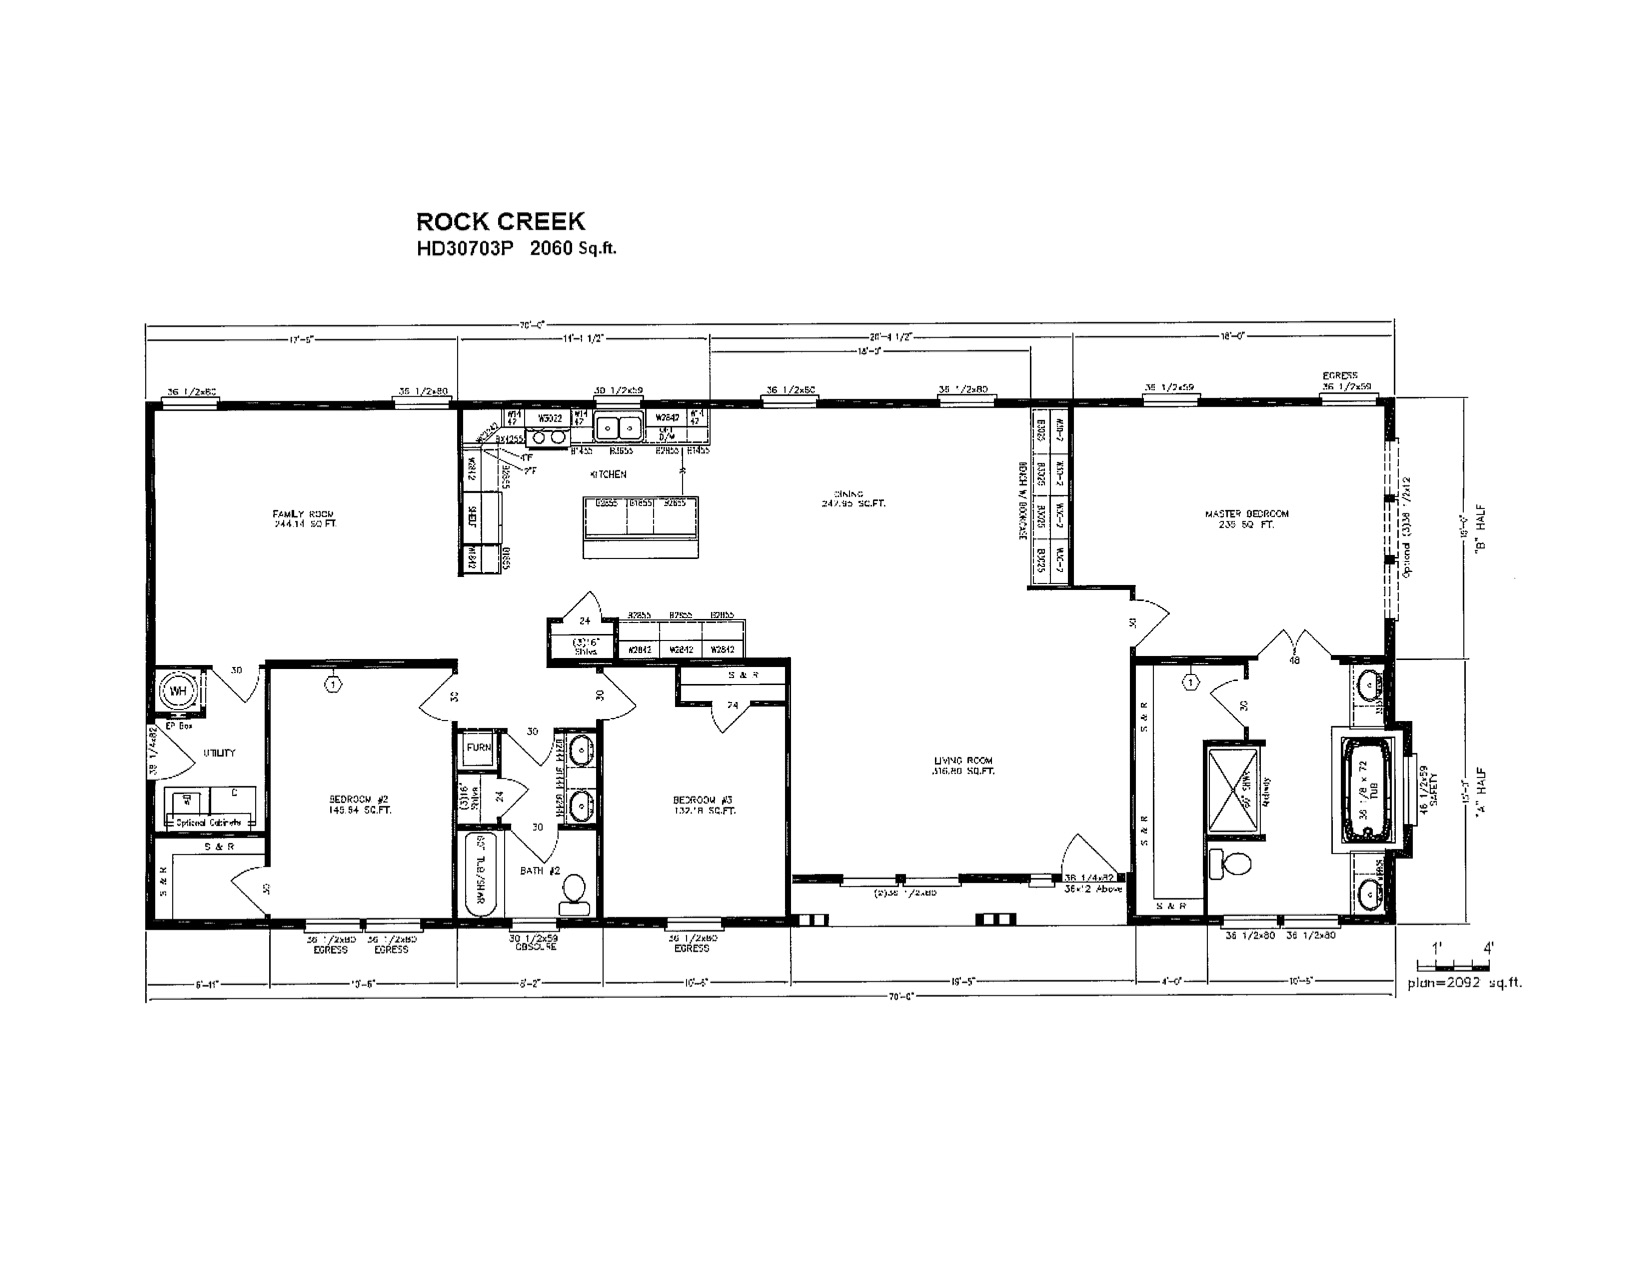 Homes Direct Modular Homes - Model HD3070P - Floorplan